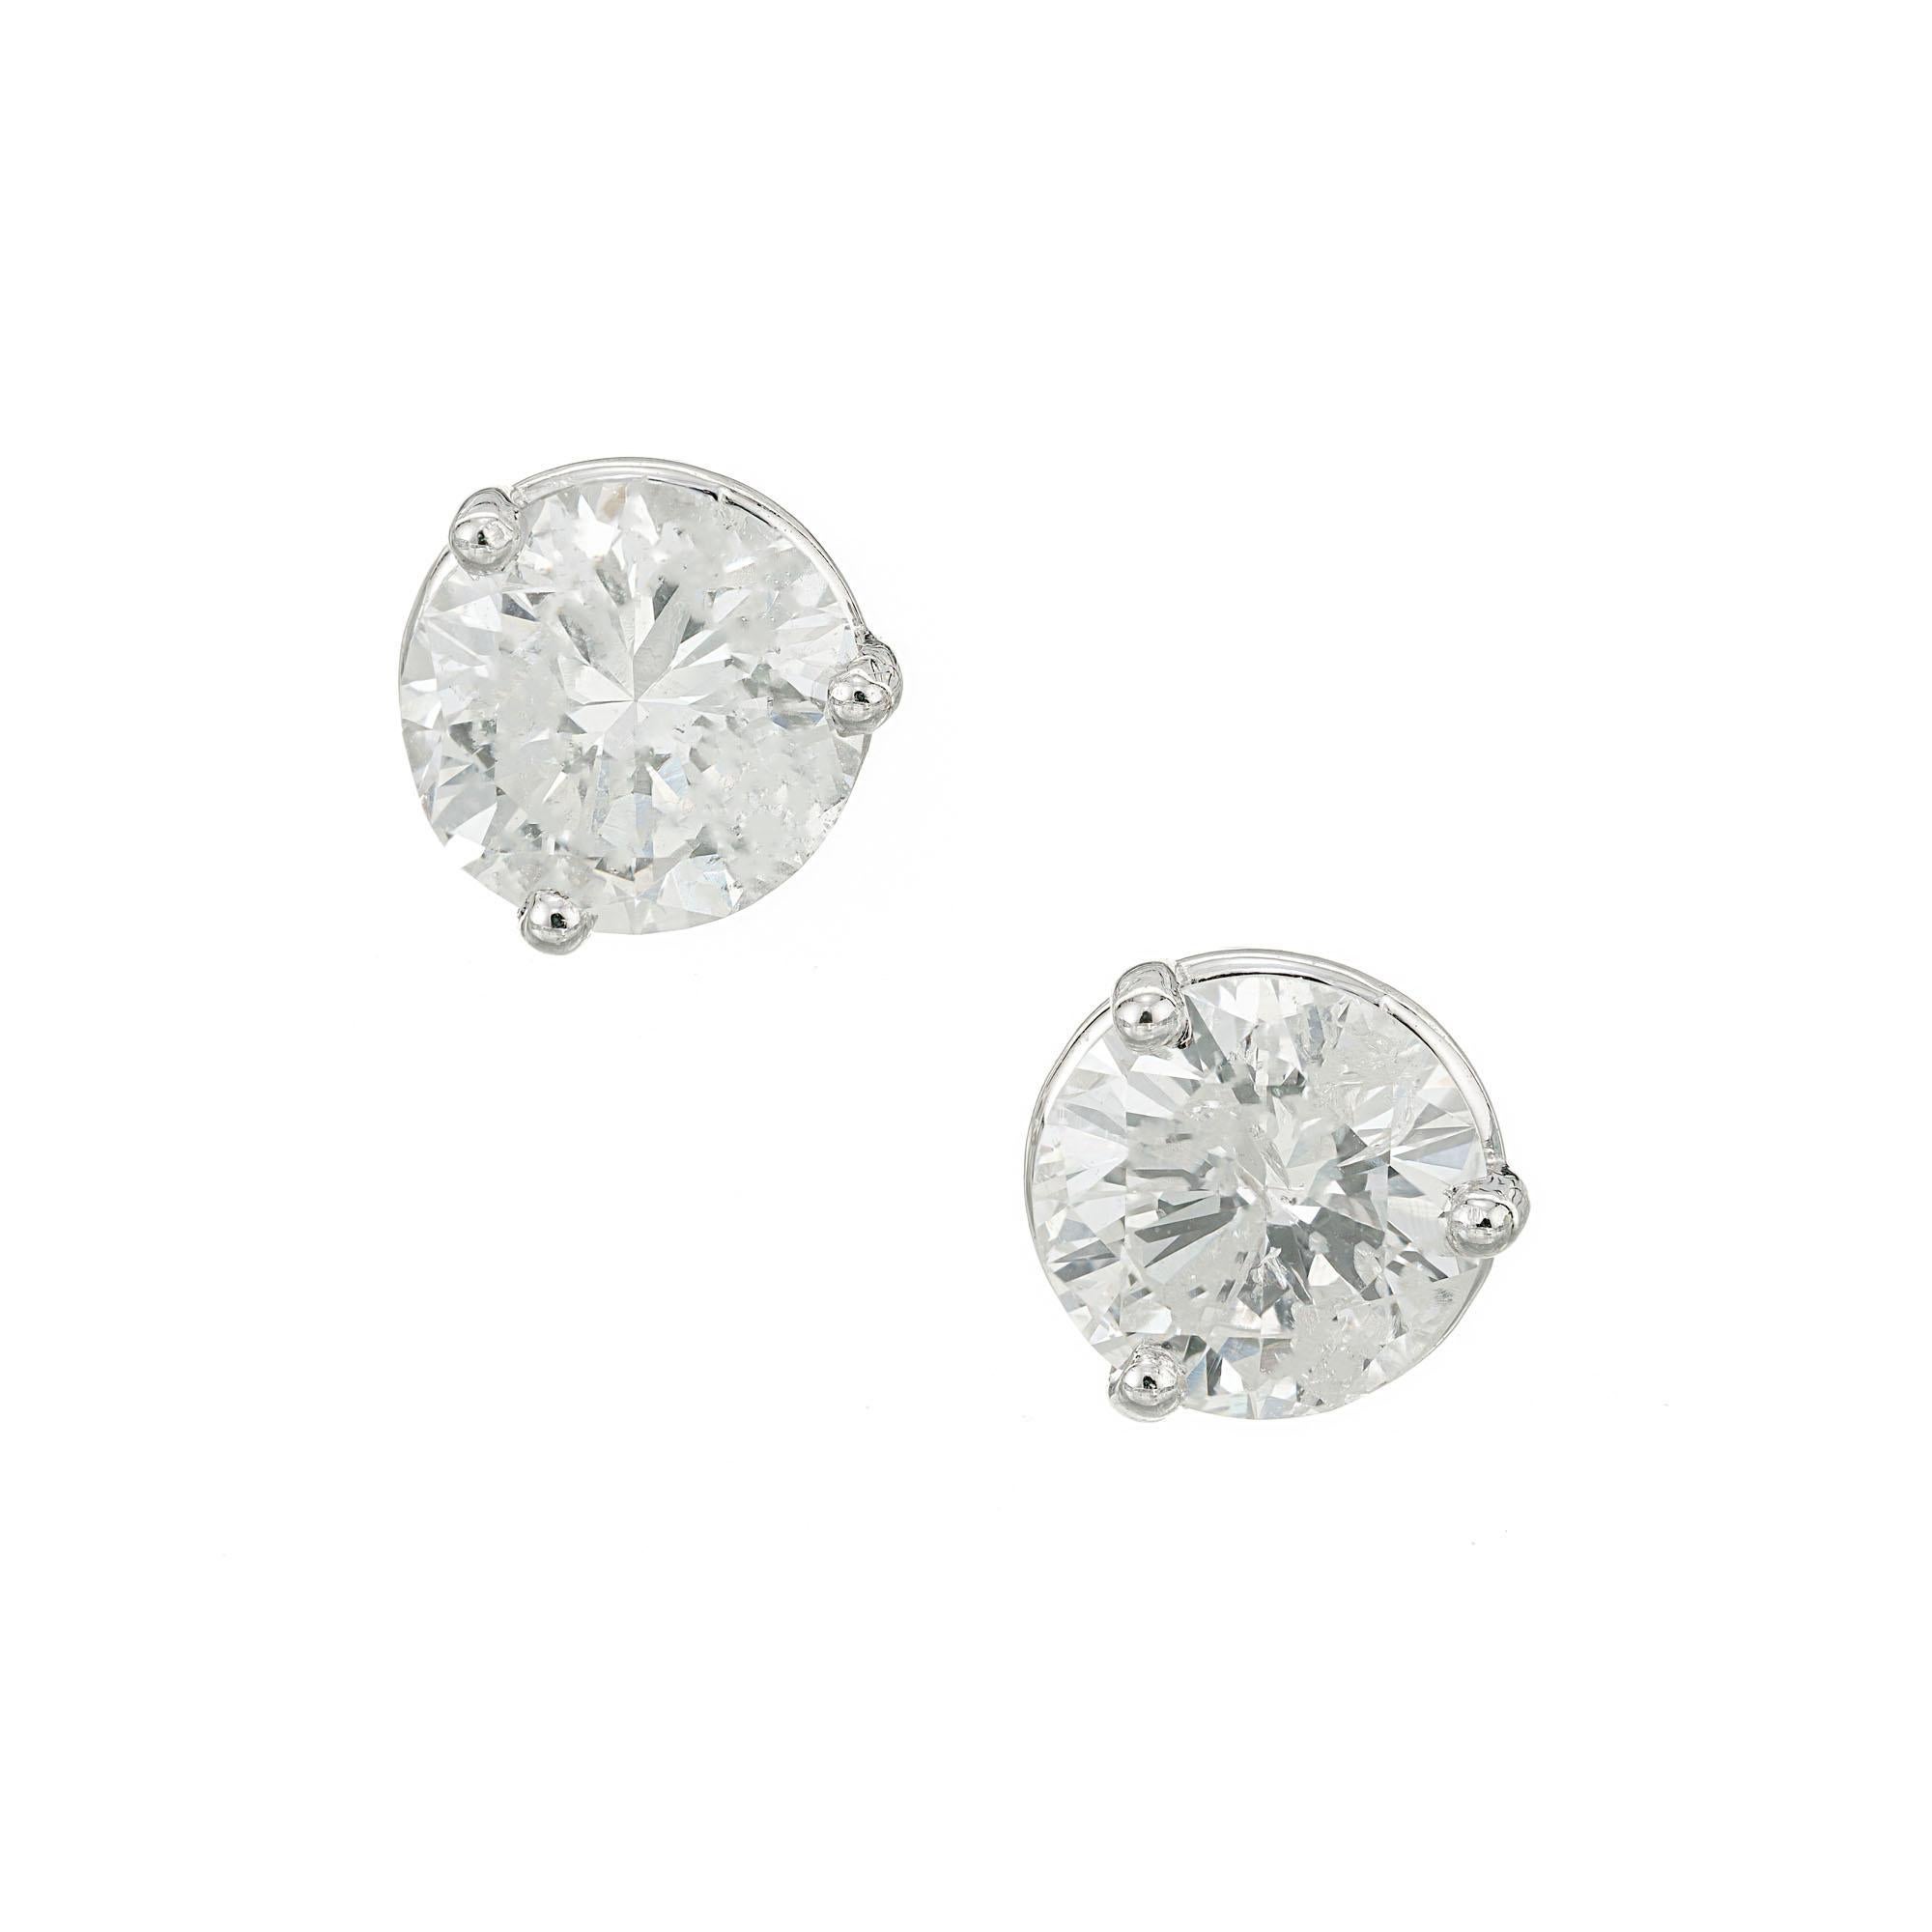 Bright white diamond stud earrings. 2.08ct round brilliant cut diamonds set in platinum basket settings.  

1 round brilliant cut diamond, approx. total weight 1.02cts, F - G, I1, 6.52 x 6.50 x 3.90mm, EGL certificate #US66679101J
1 round brilliant